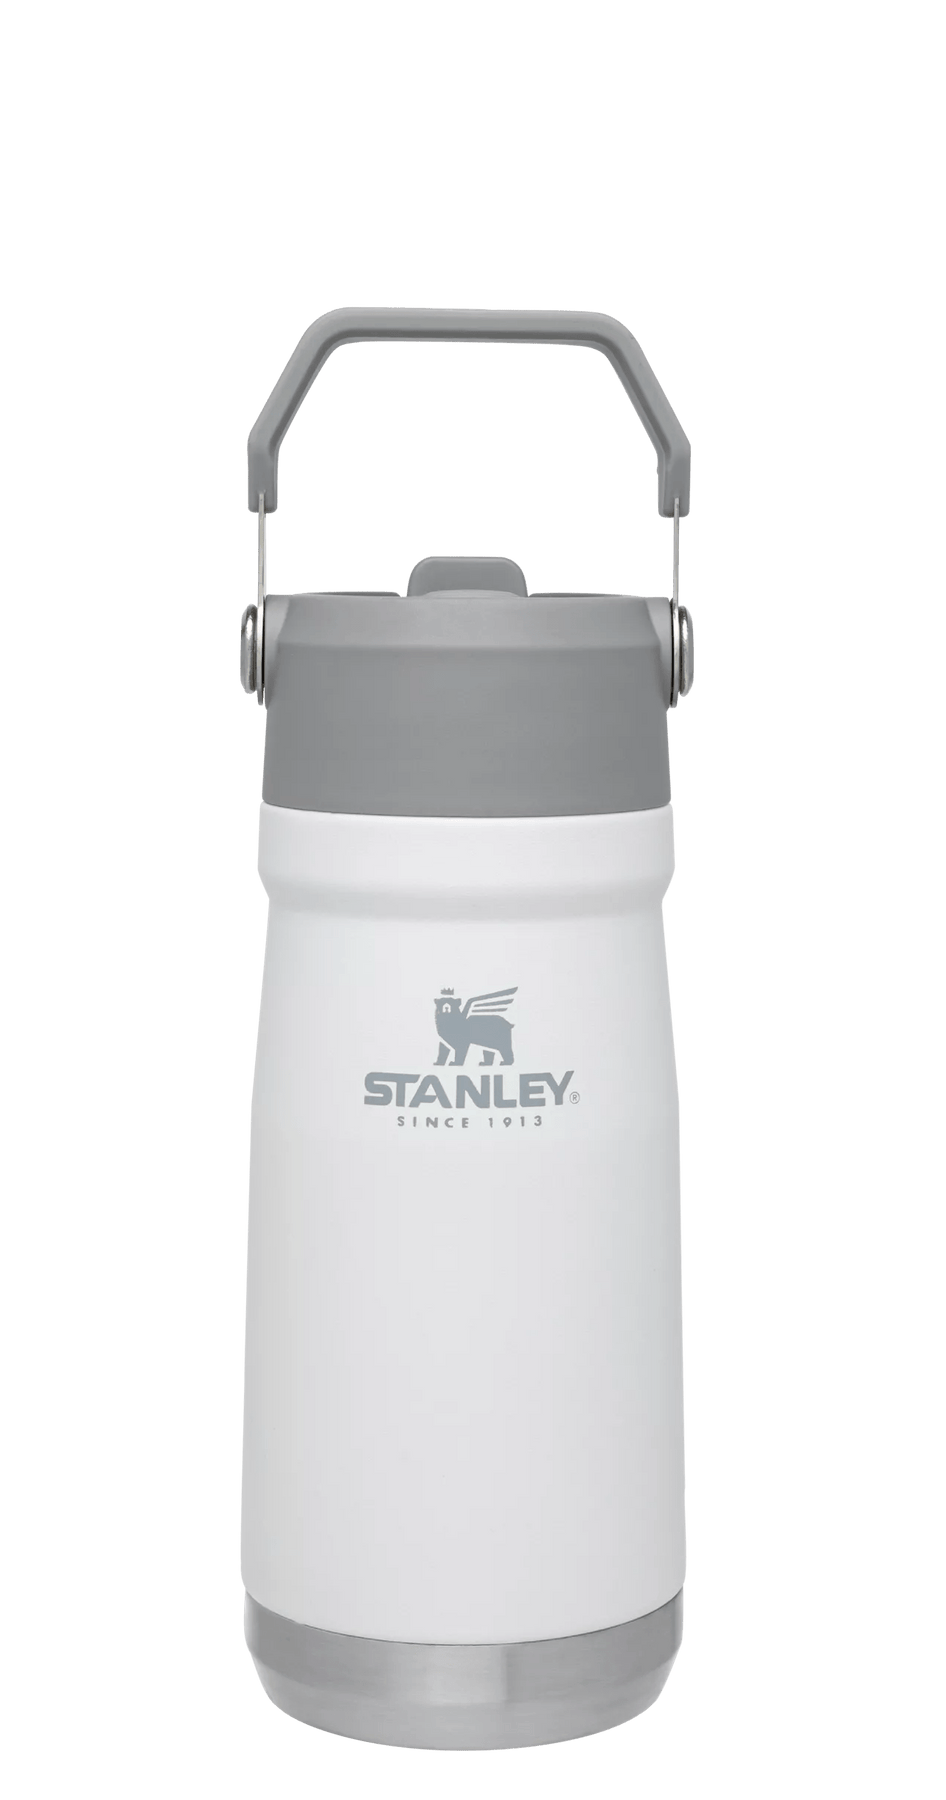 Stanley 24 oz. AeroLight IceFlow Bottle with Fast Flow Lid